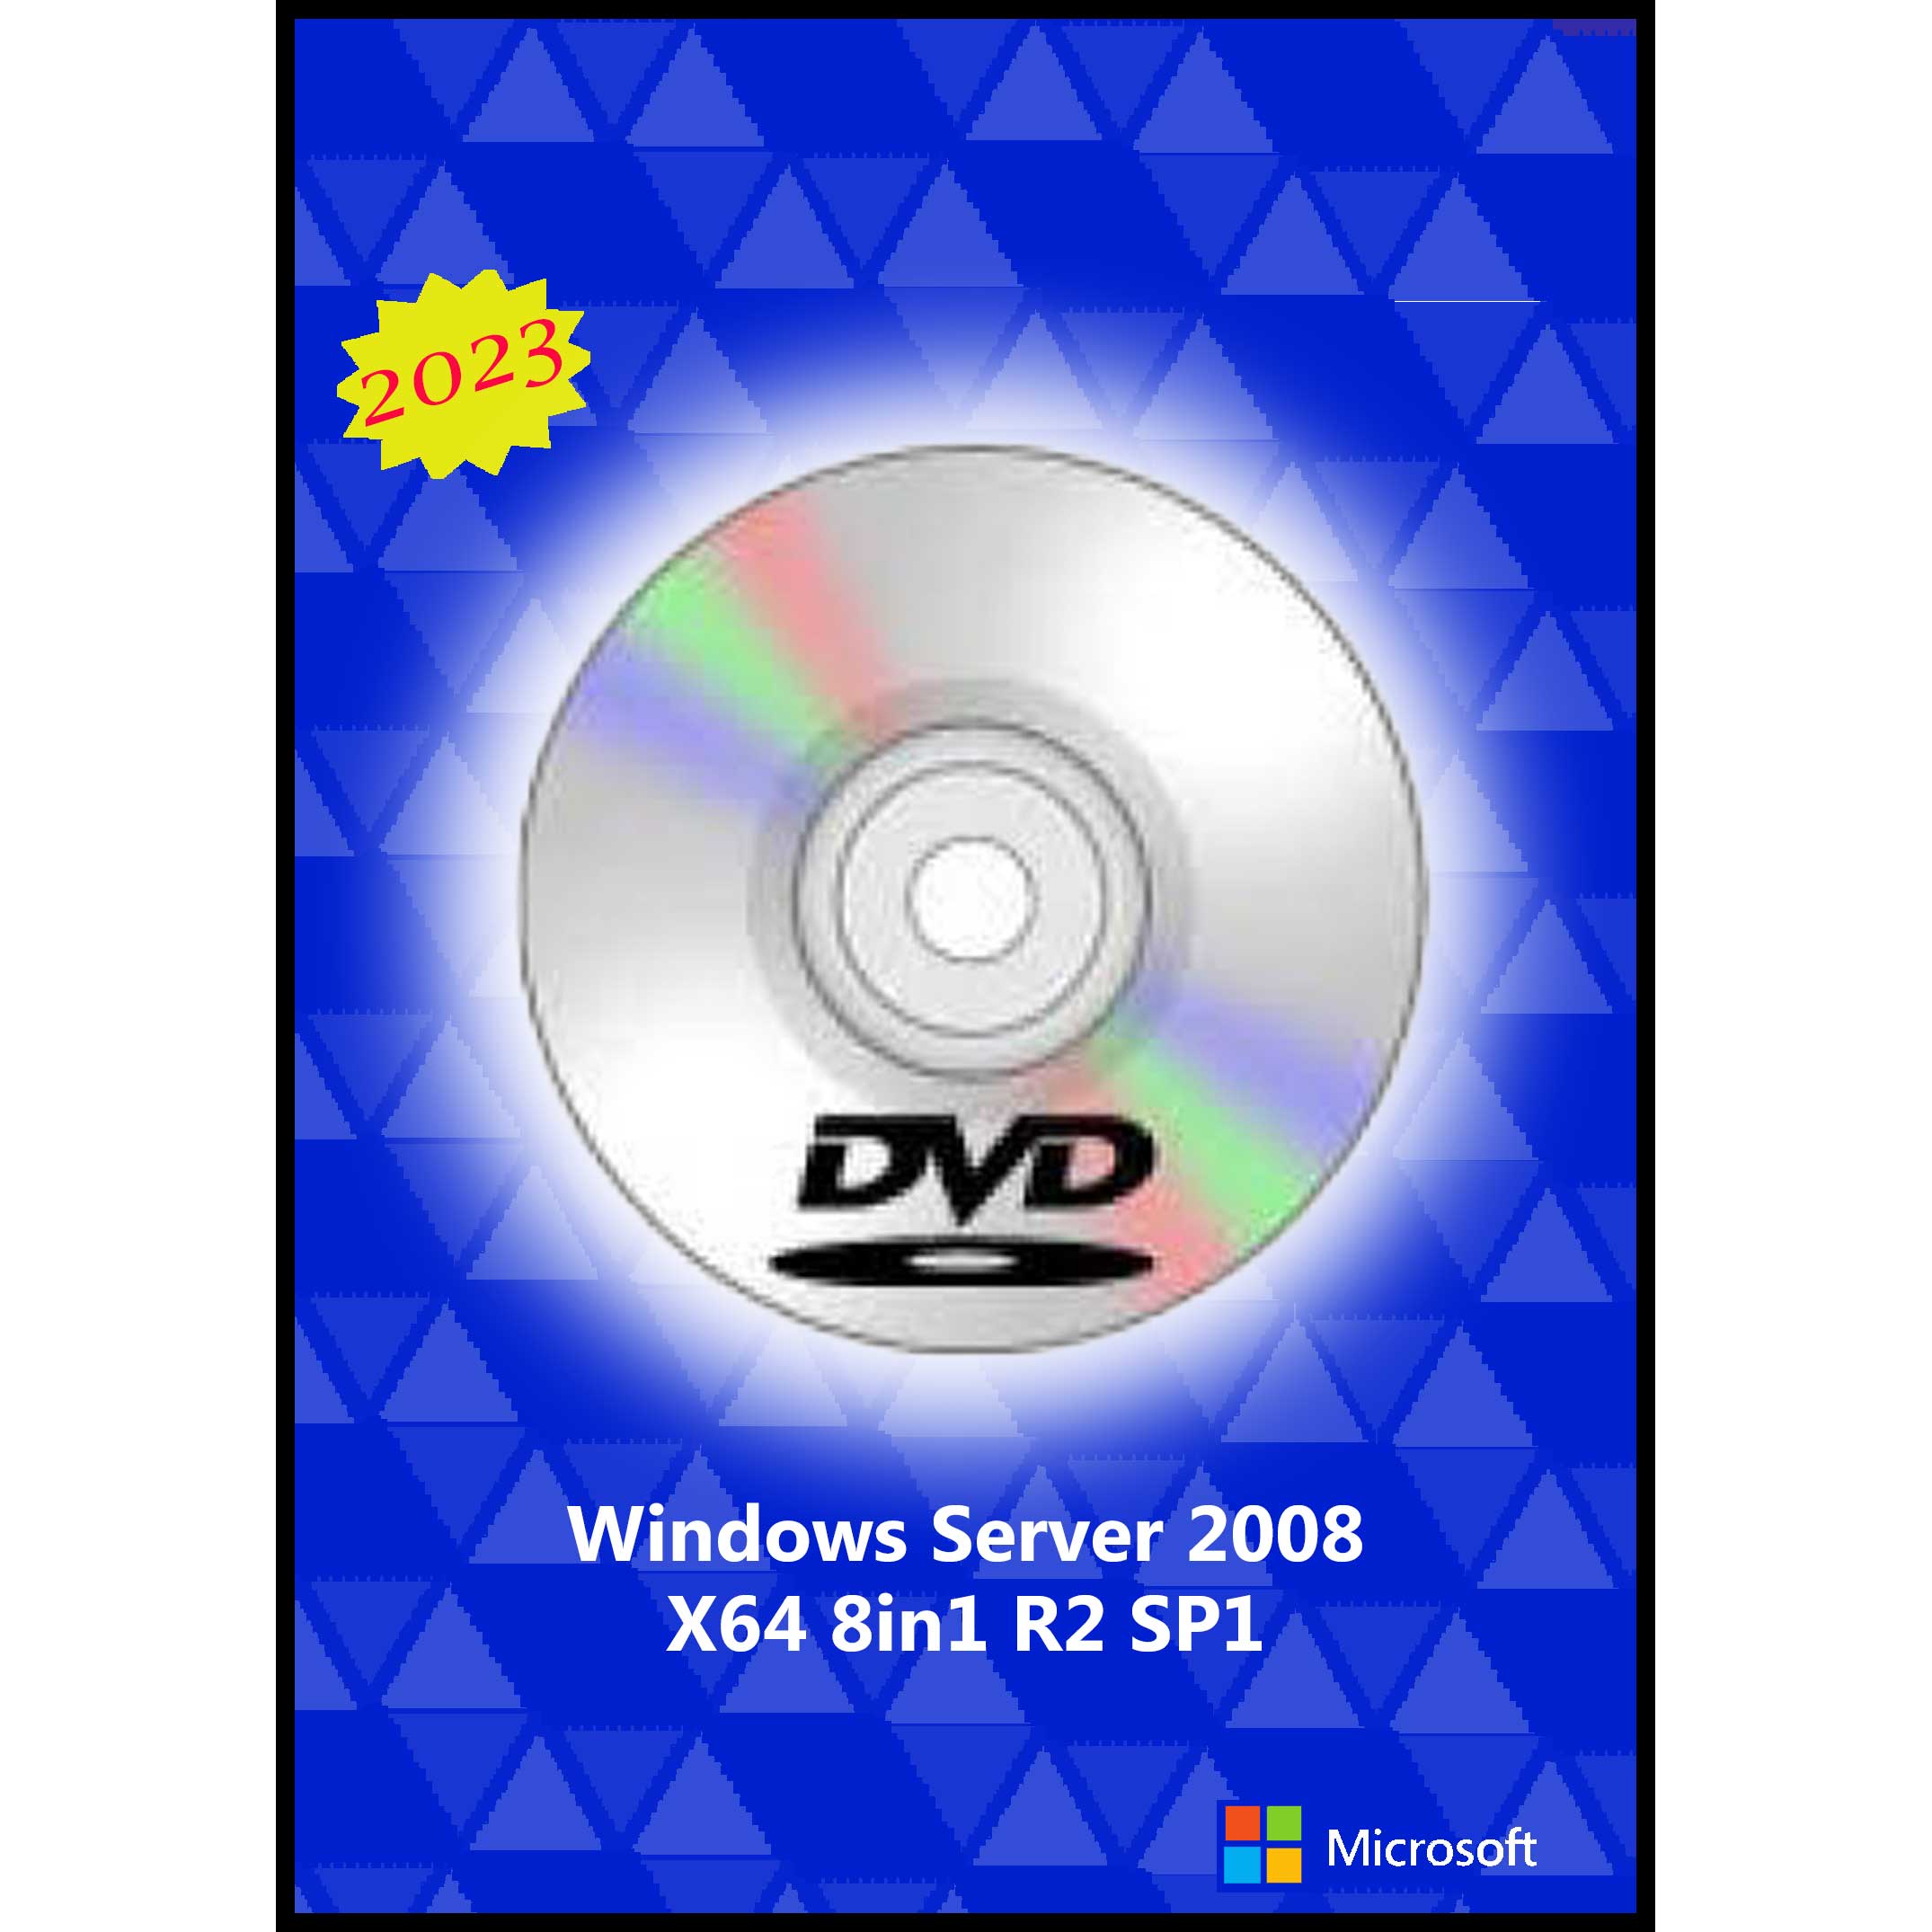 سیستم عامل Windows Server 2008 8in1 R2 SP1 - 2023 DVD9 نشر مایکروسافت